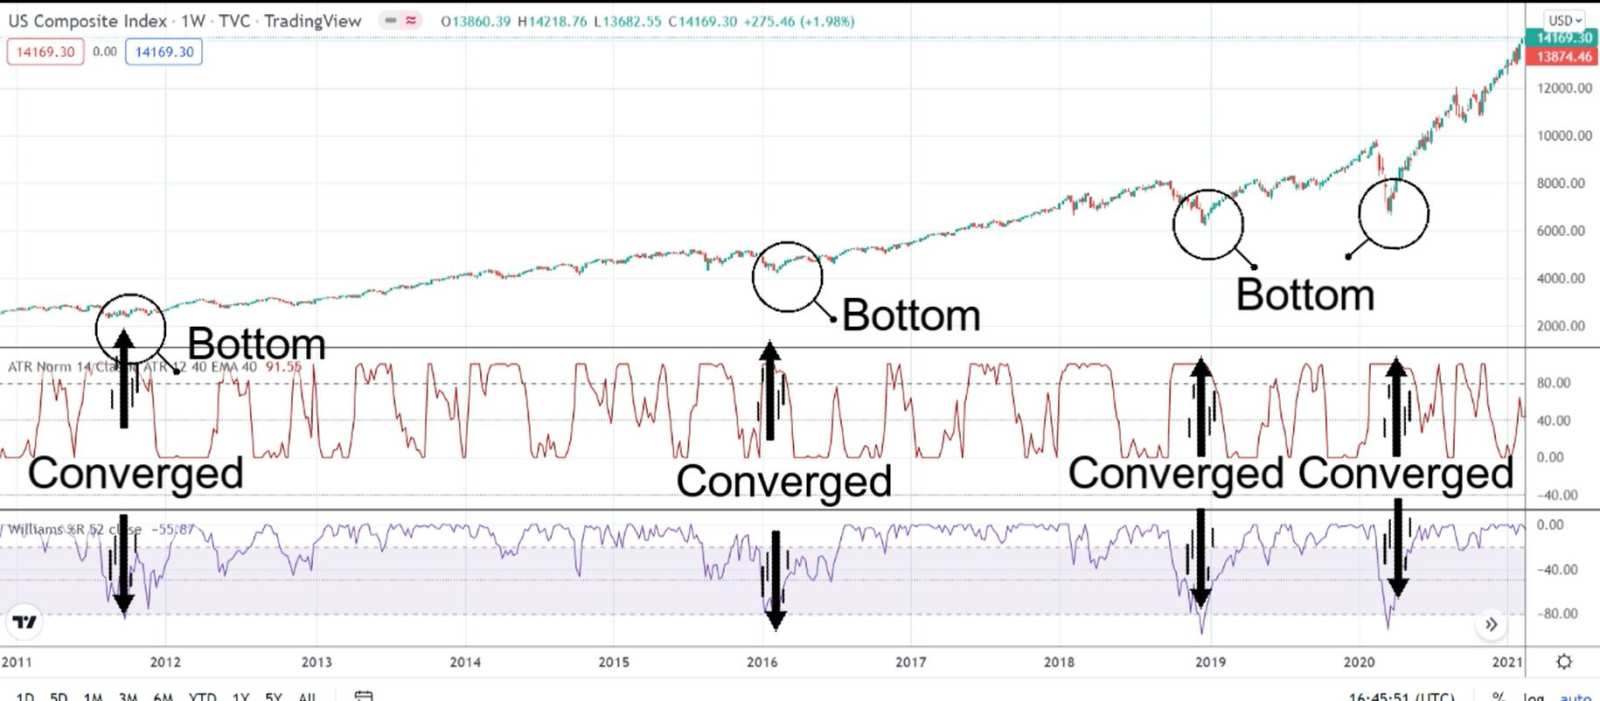 Market bottom strategy: Catch the bottom in a deep correction/bear market